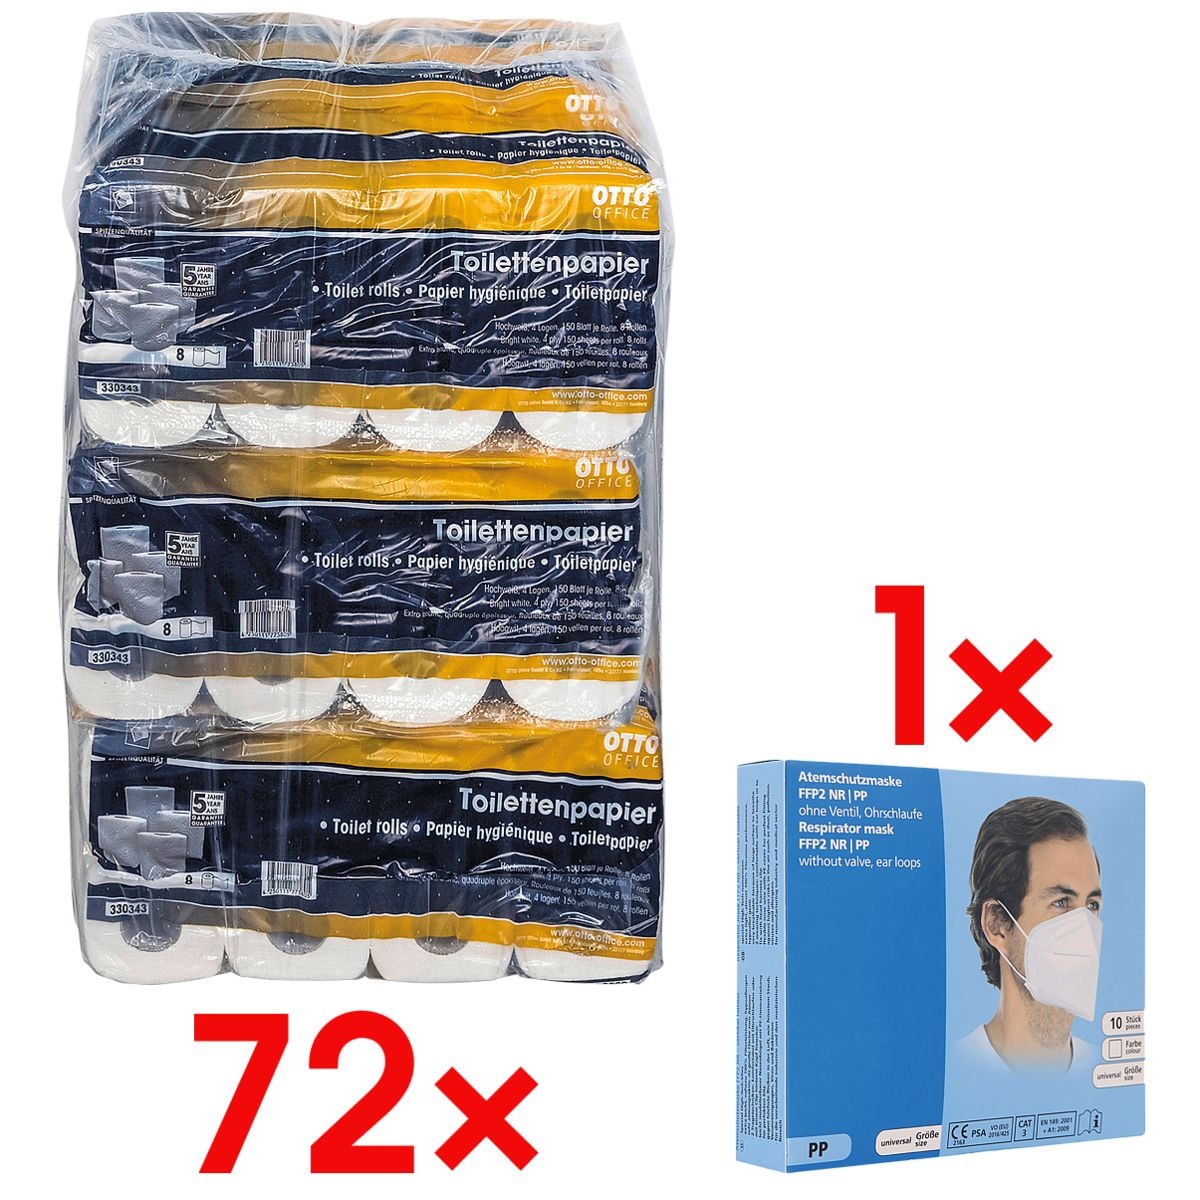 Toilettenpapier Premium 4-lagig - 72 Rollen inkl. 10 Atemschutzmasken FFP2